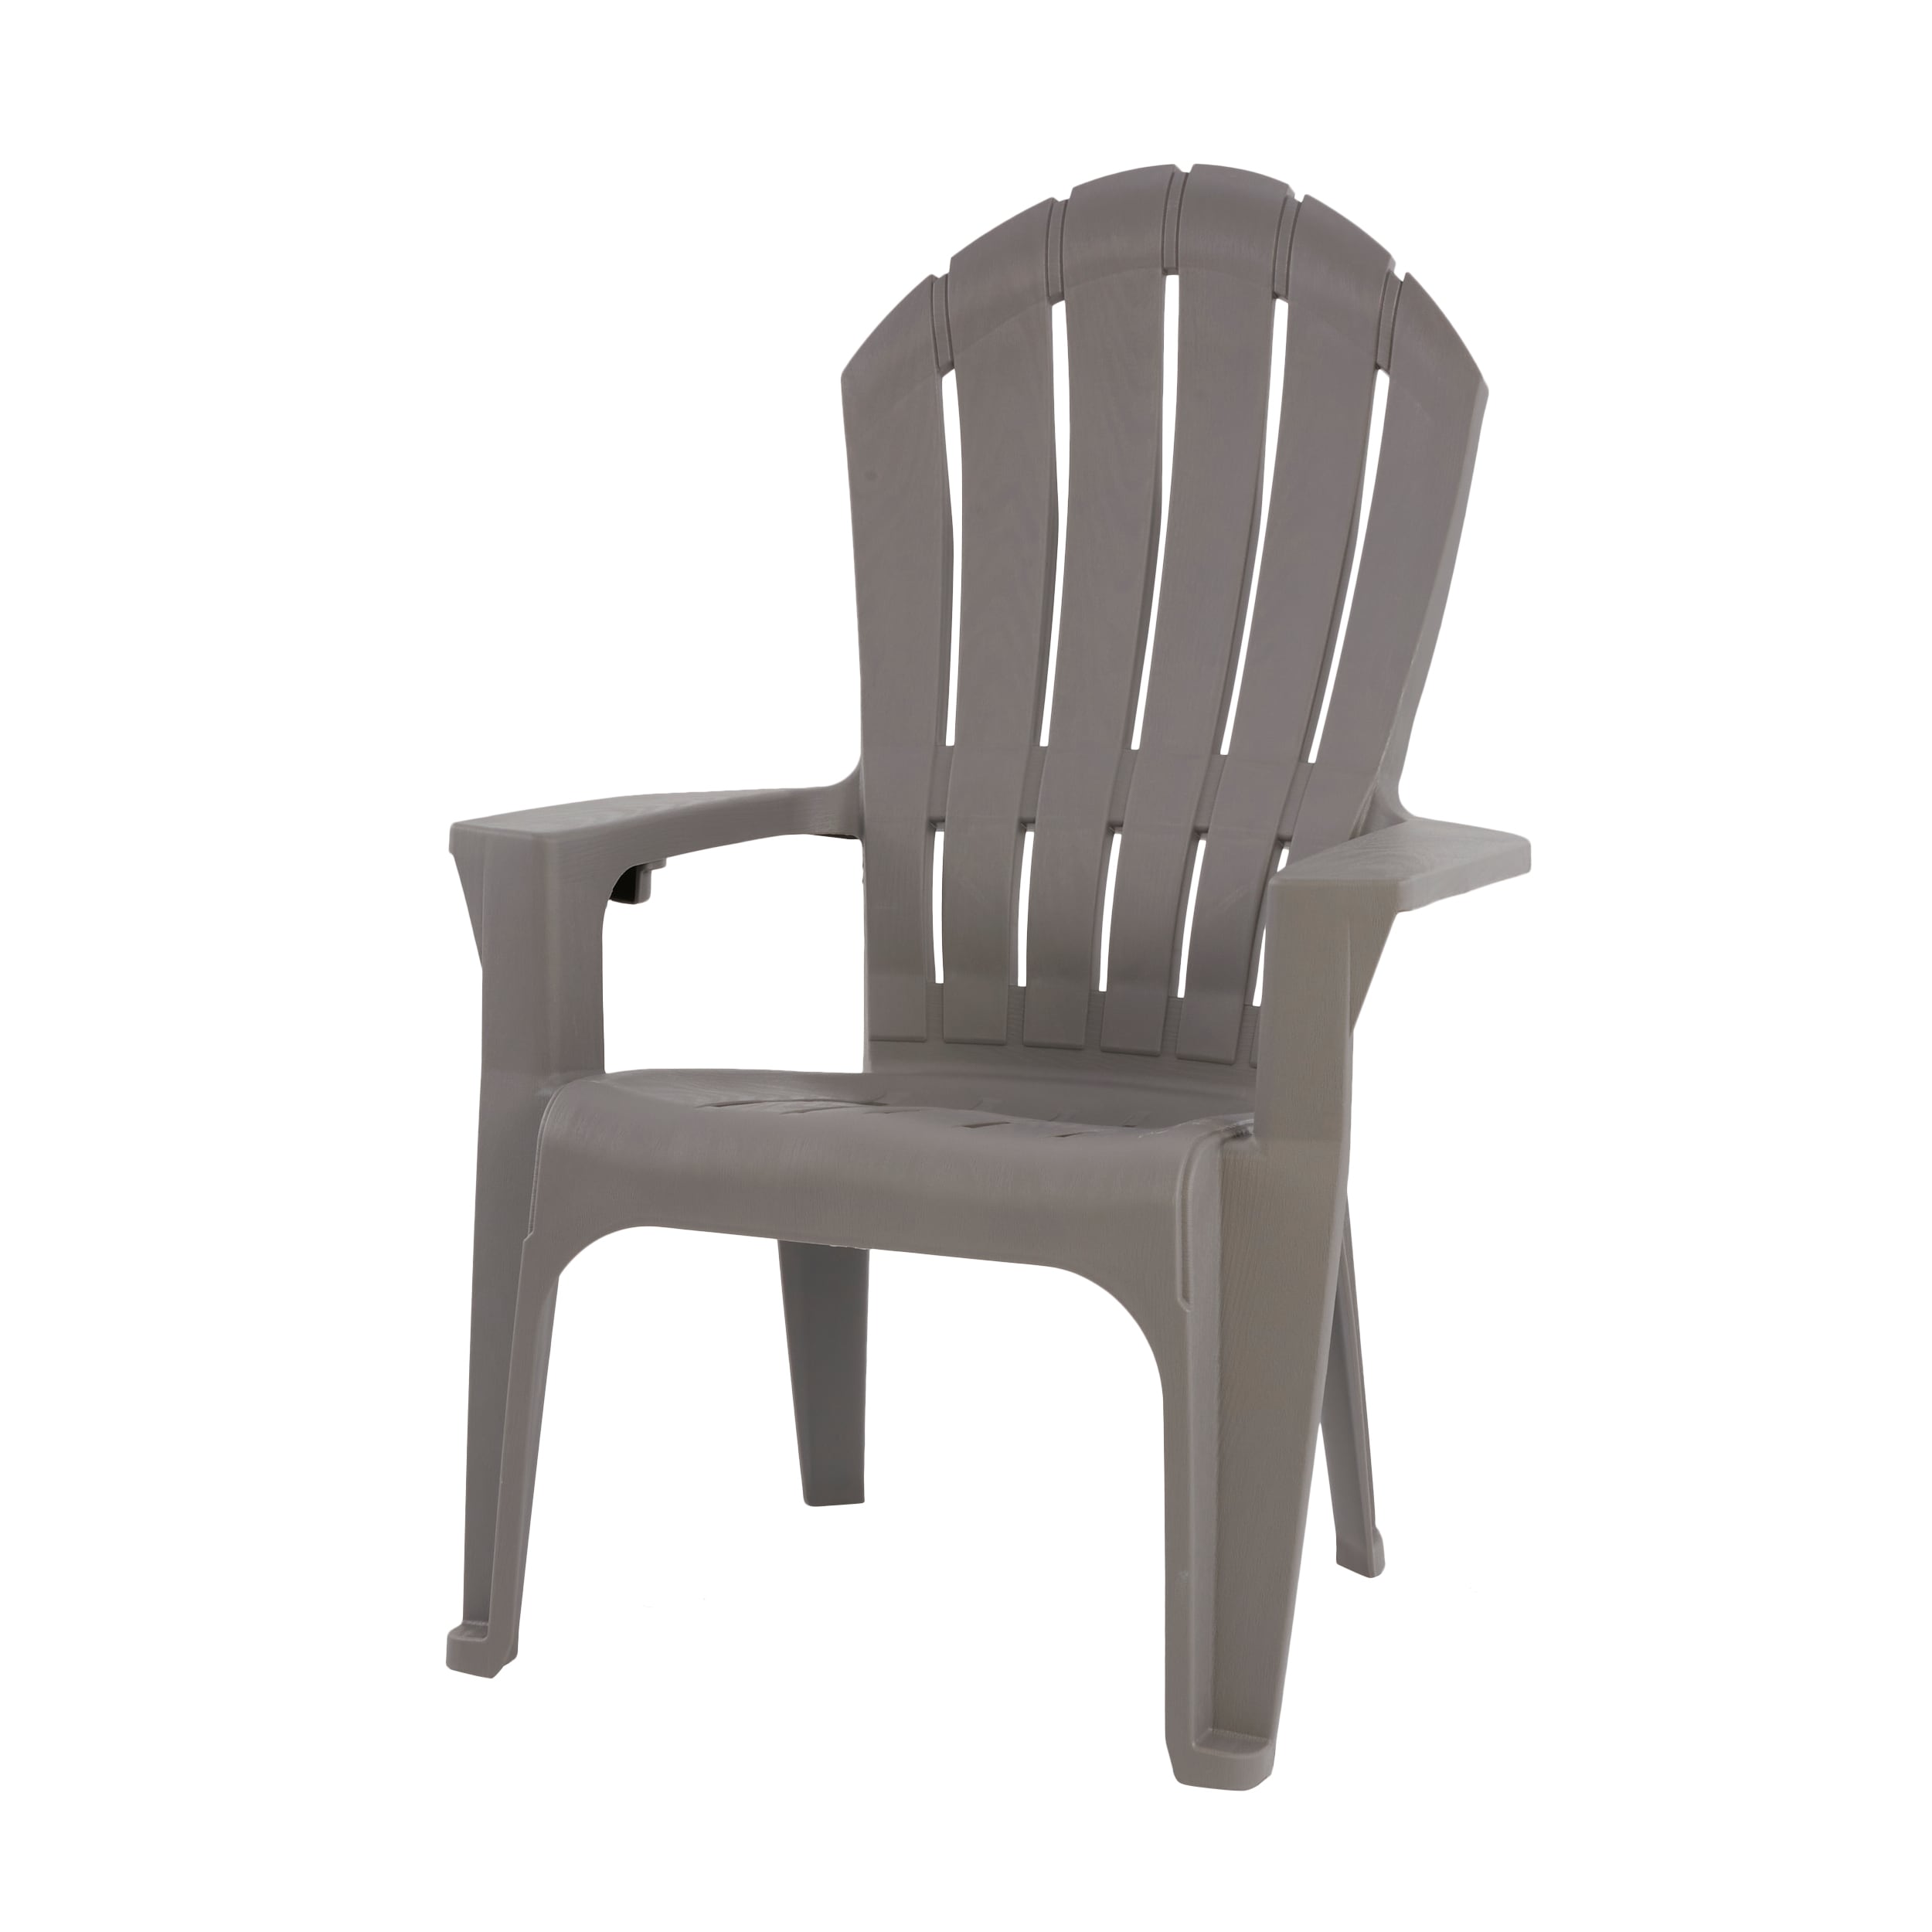 adams big easy adirondack chair